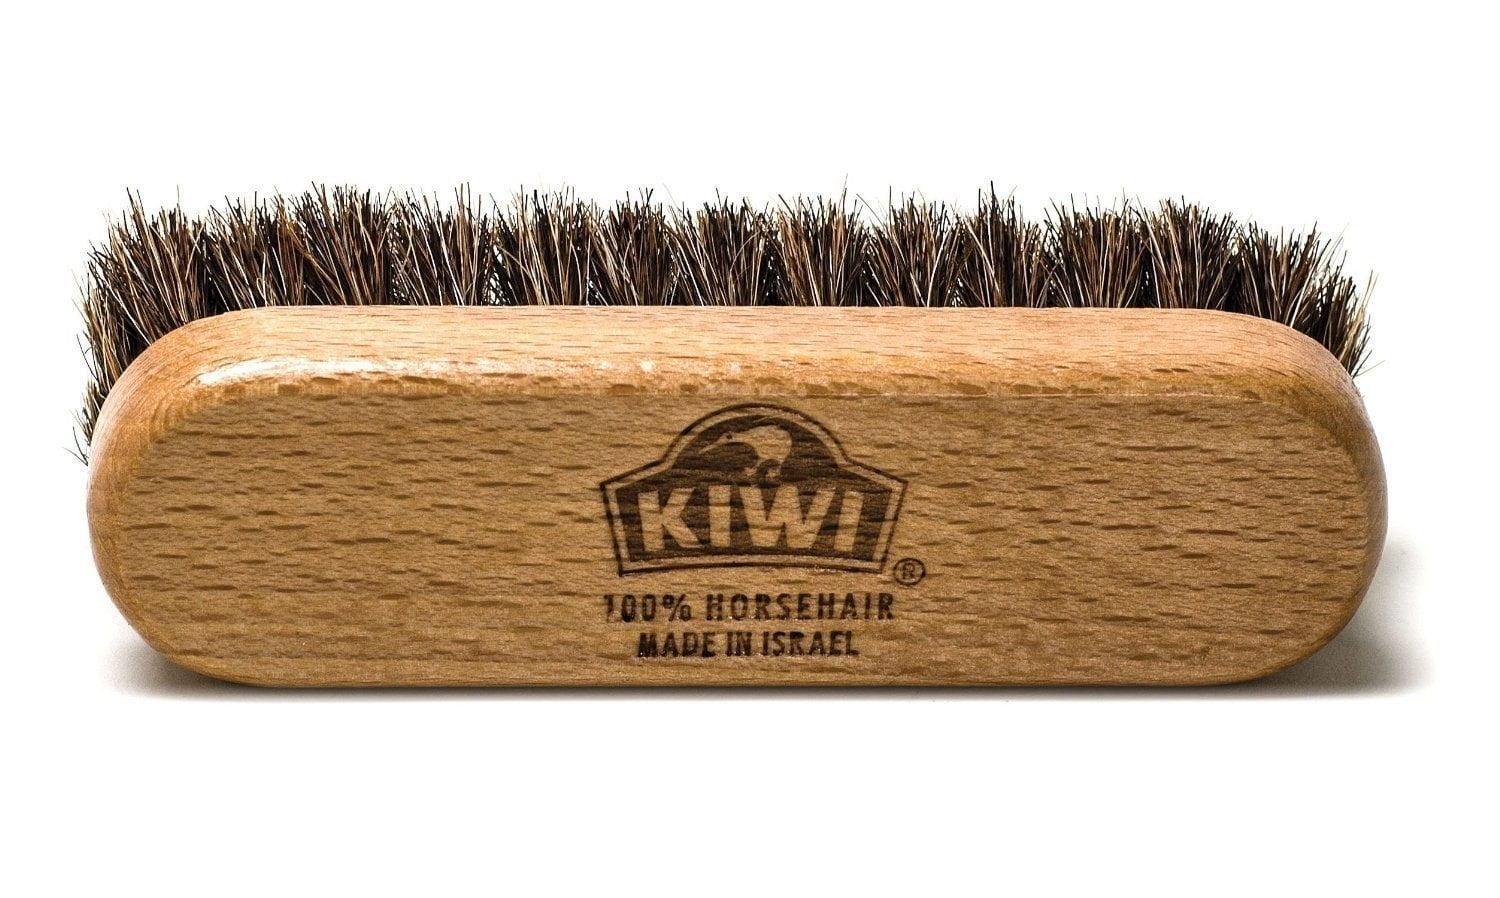 Kiwi Shoe Shine Brush 100% Horsehair 6 1/2" Long NEW 